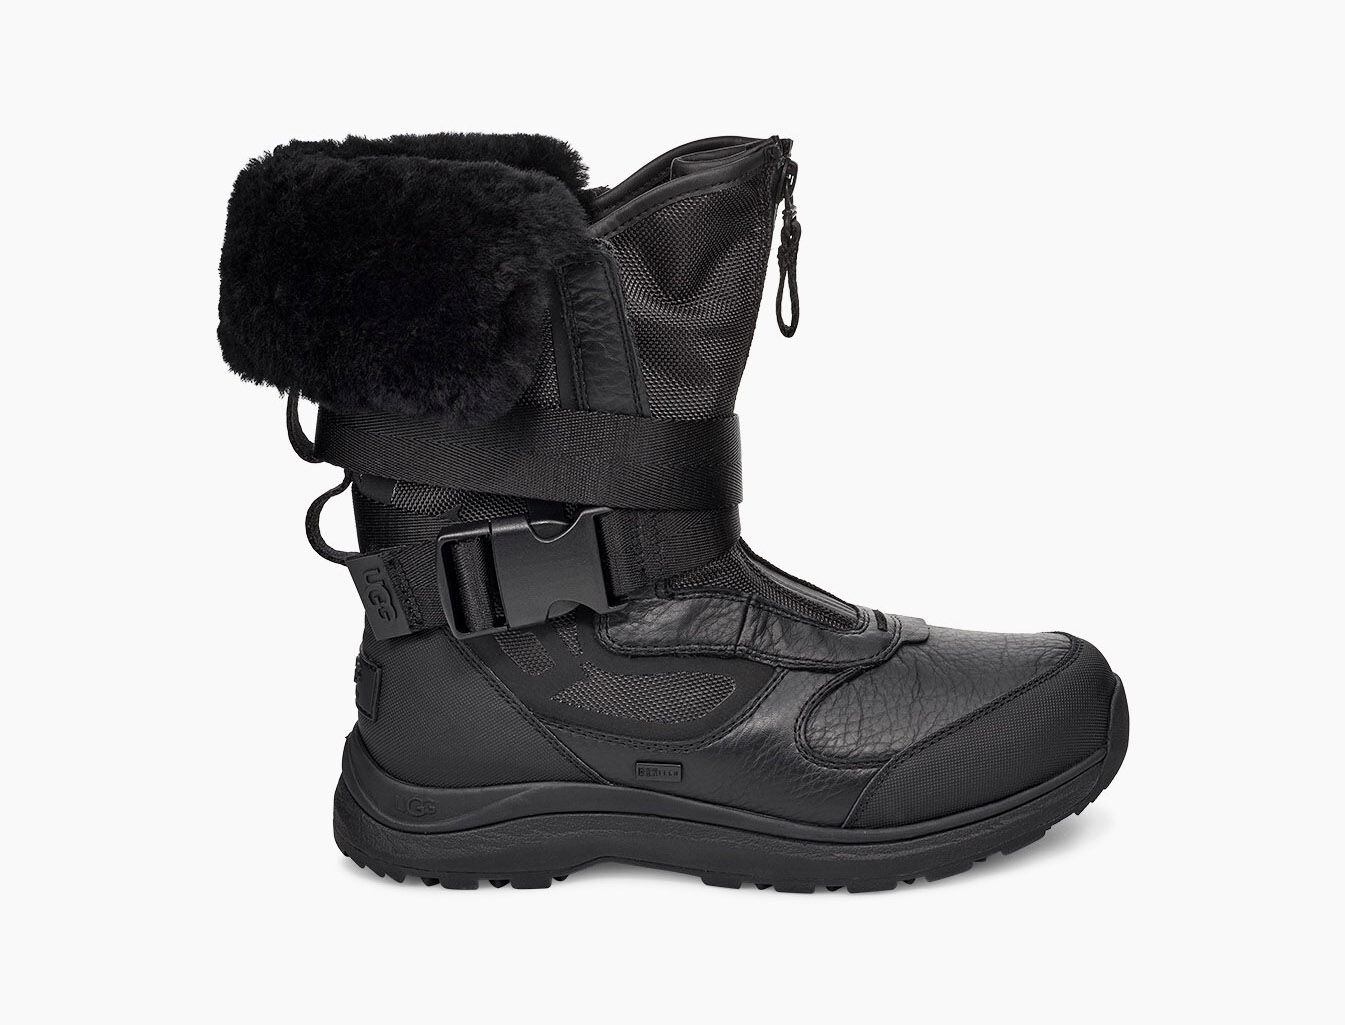 new black ugg boots